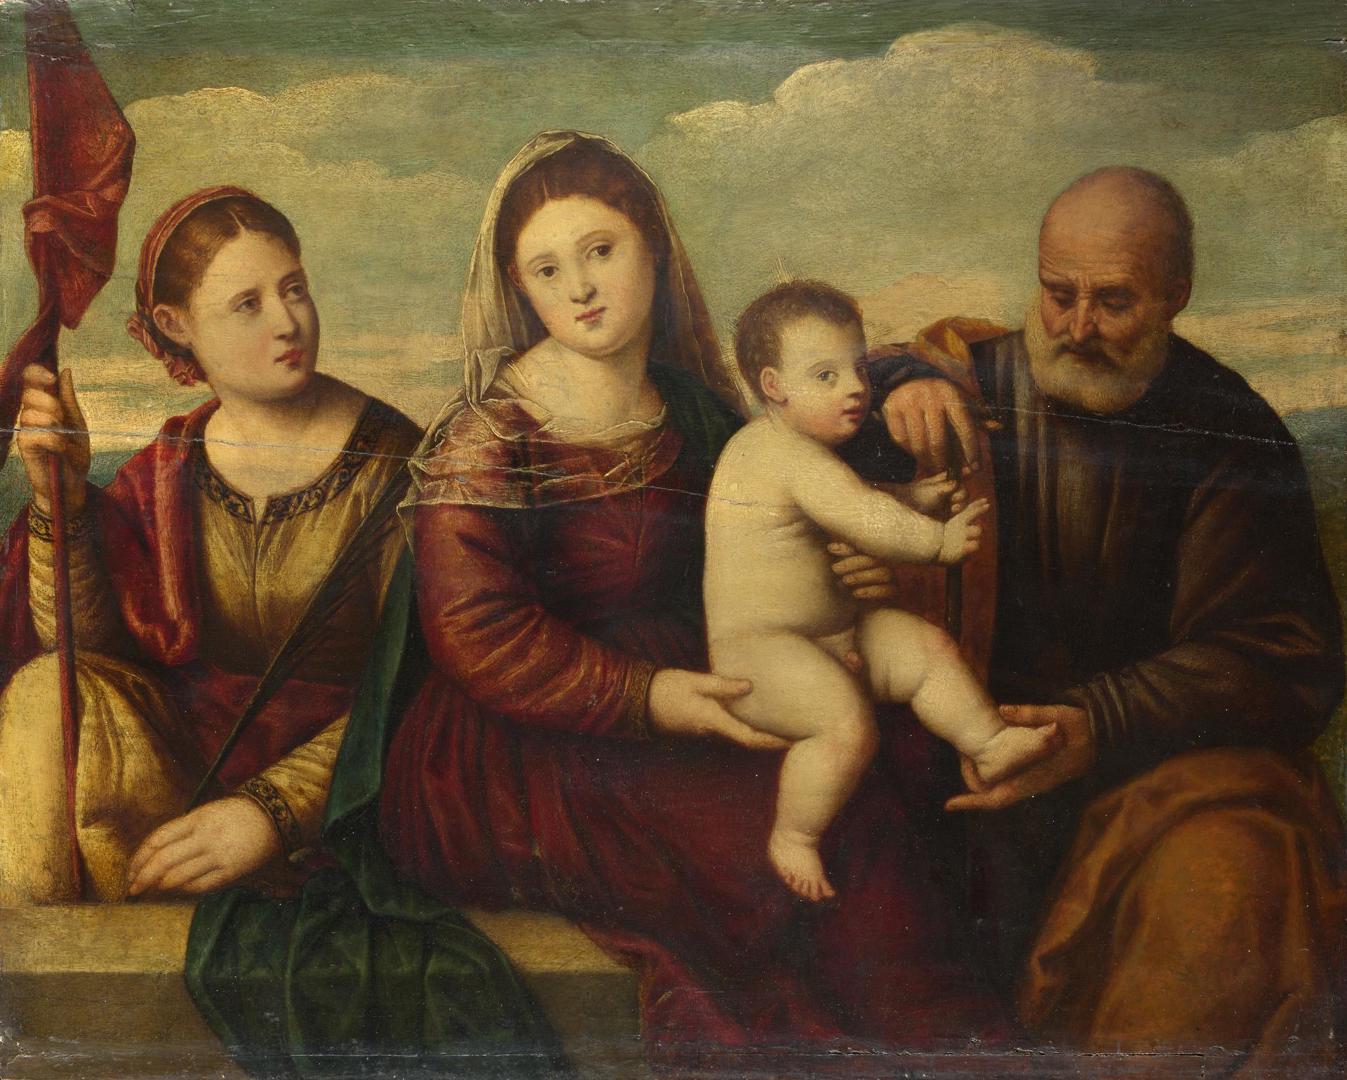 The Madonna and Child with Saints by Bernardino Licinio